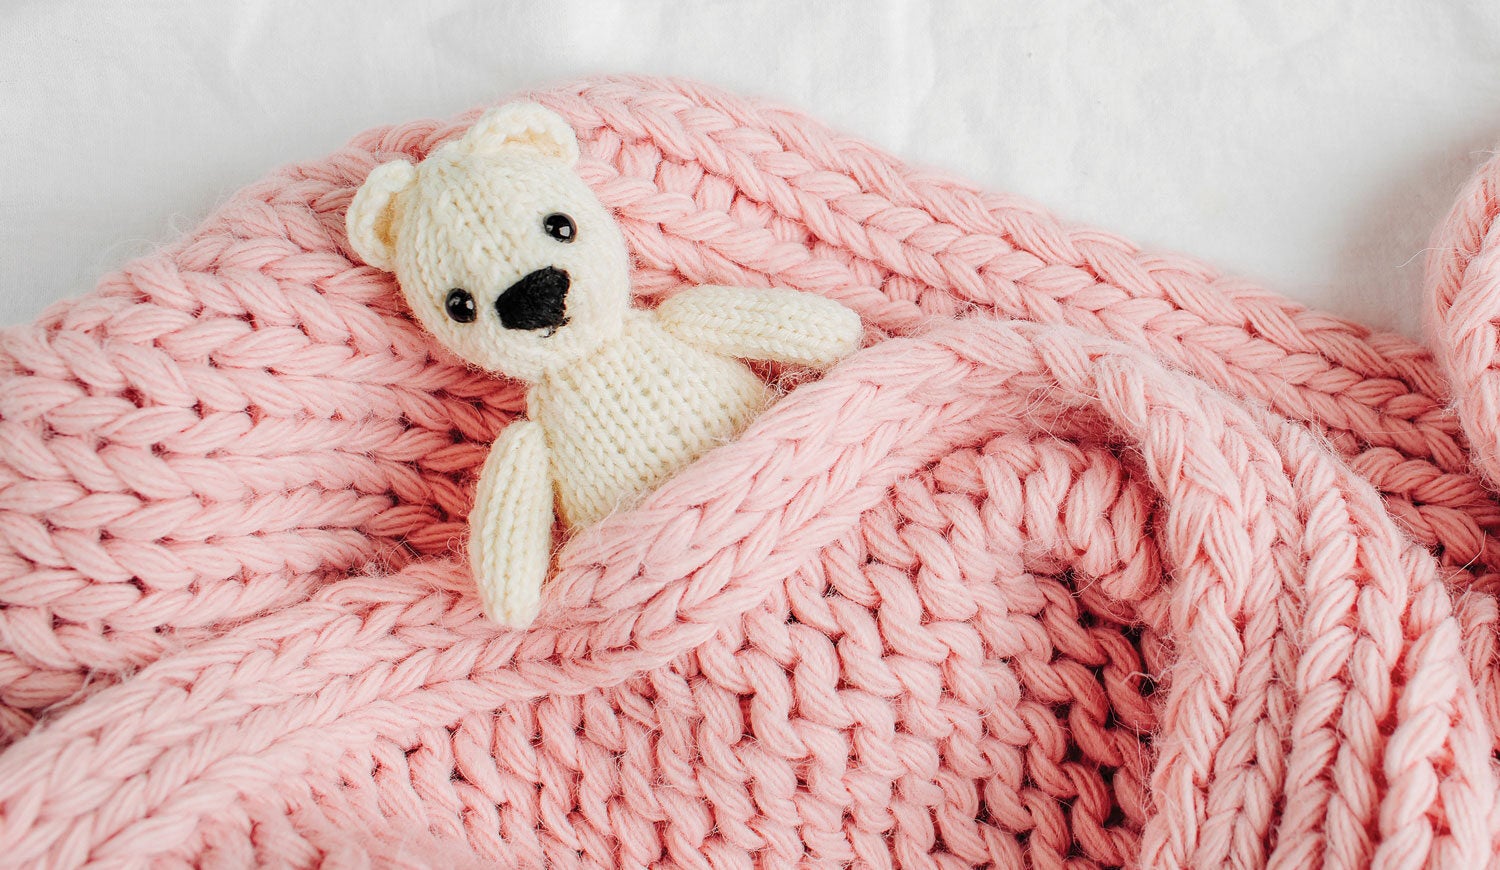 Teddy in blanket